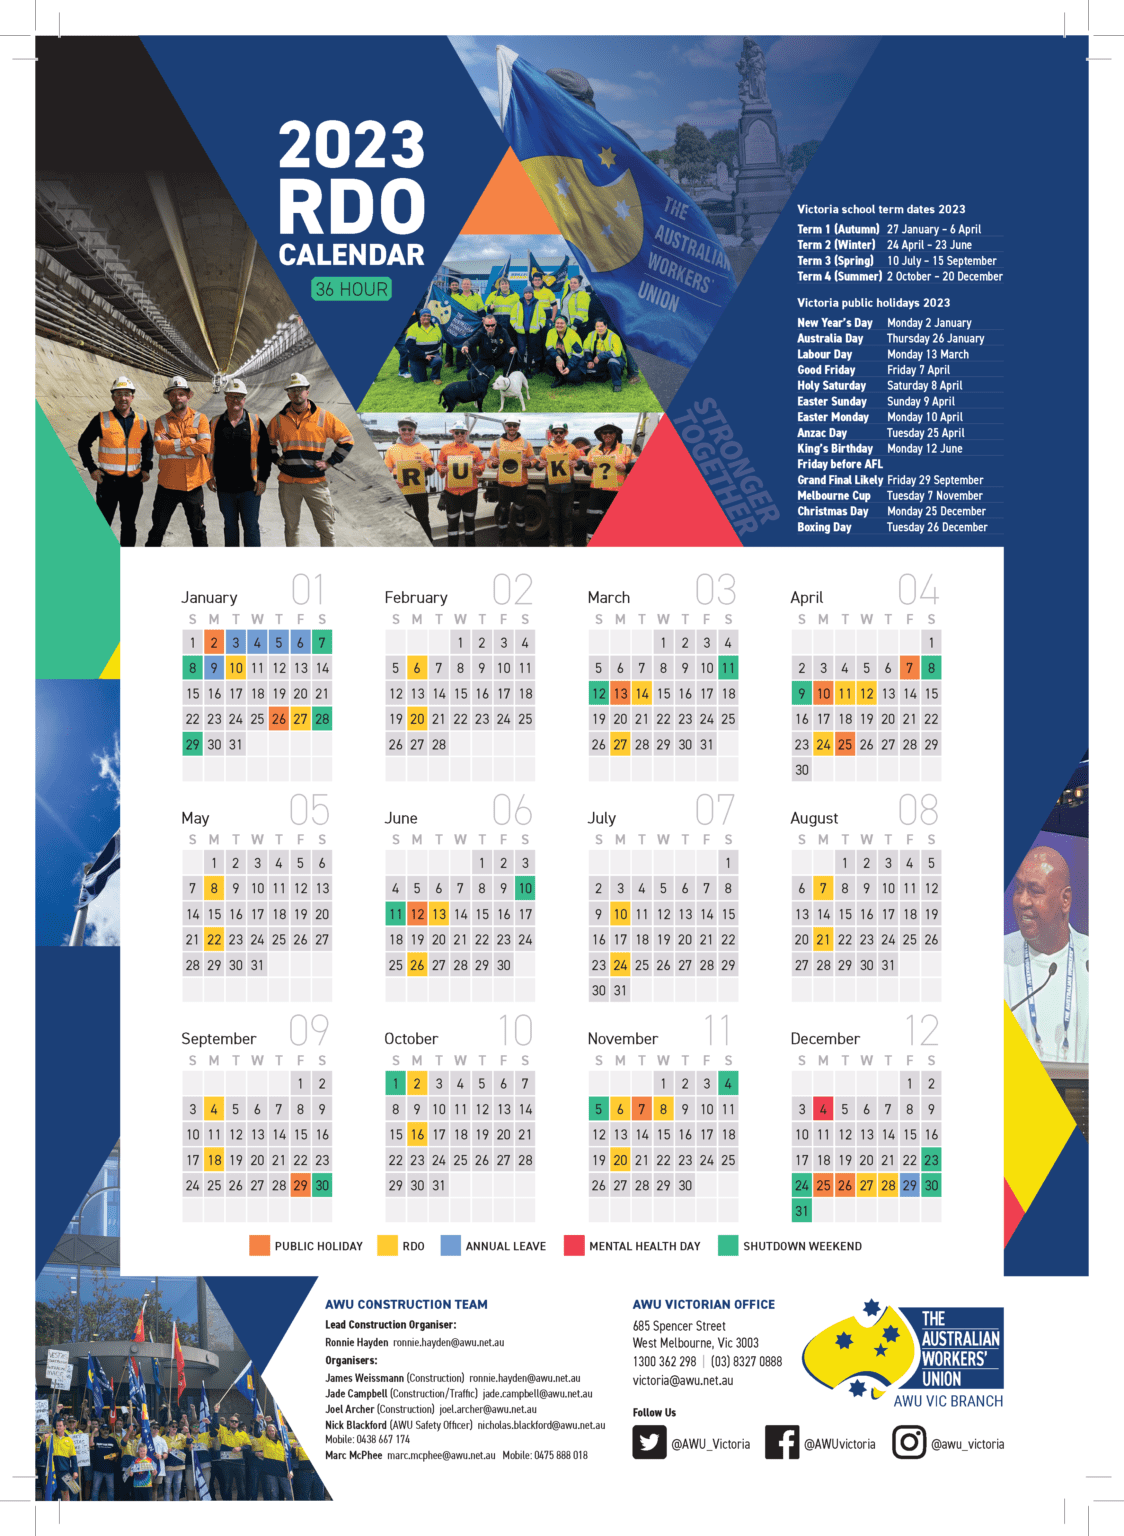 AWU VICTORIA RDO Calendars 2023 The Australian Workers' Union The